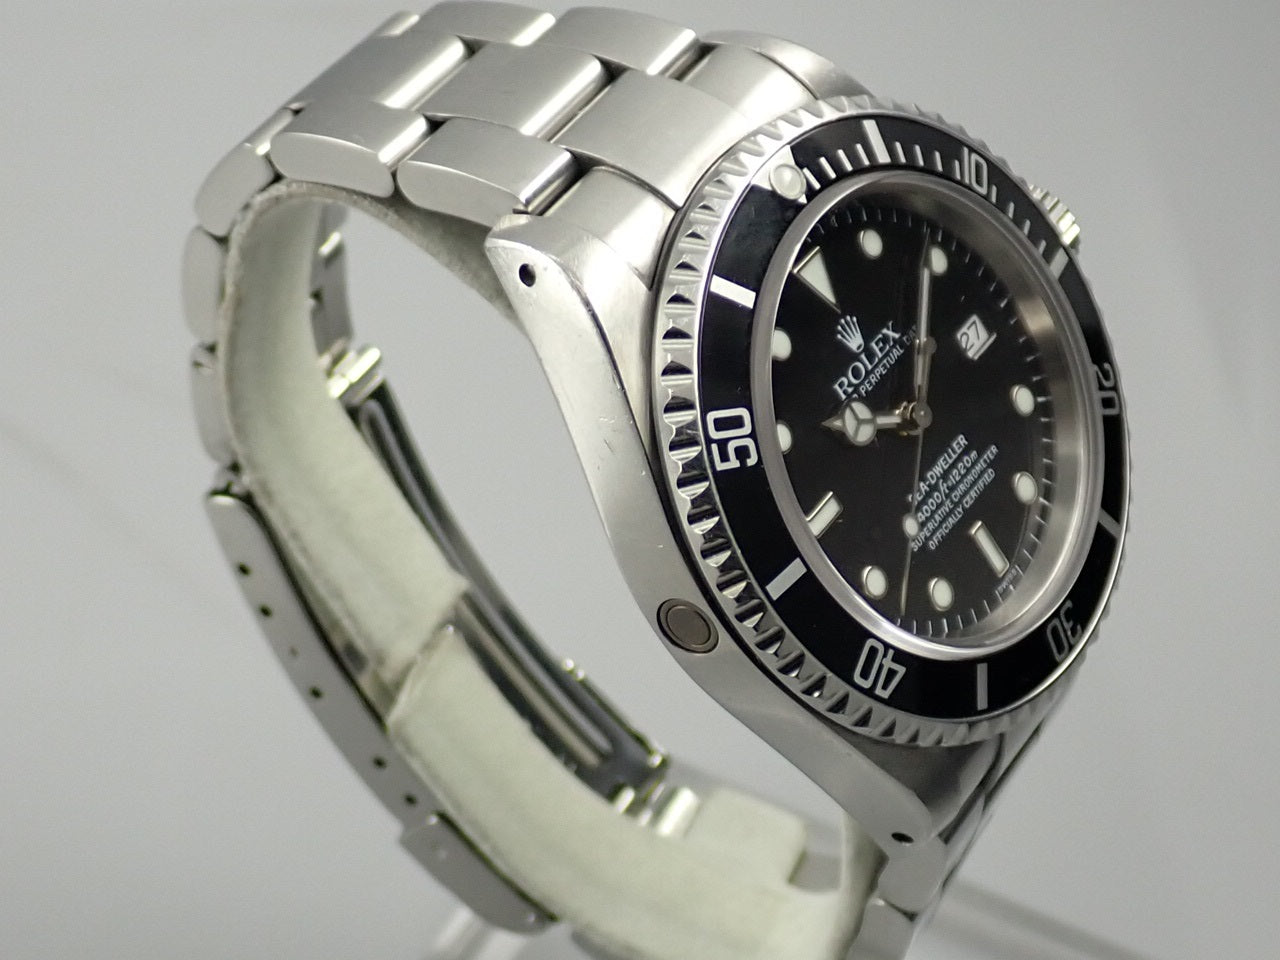 Rolex Sea-Dweller A-serial number &lt;Warranty, box, etc.&gt;